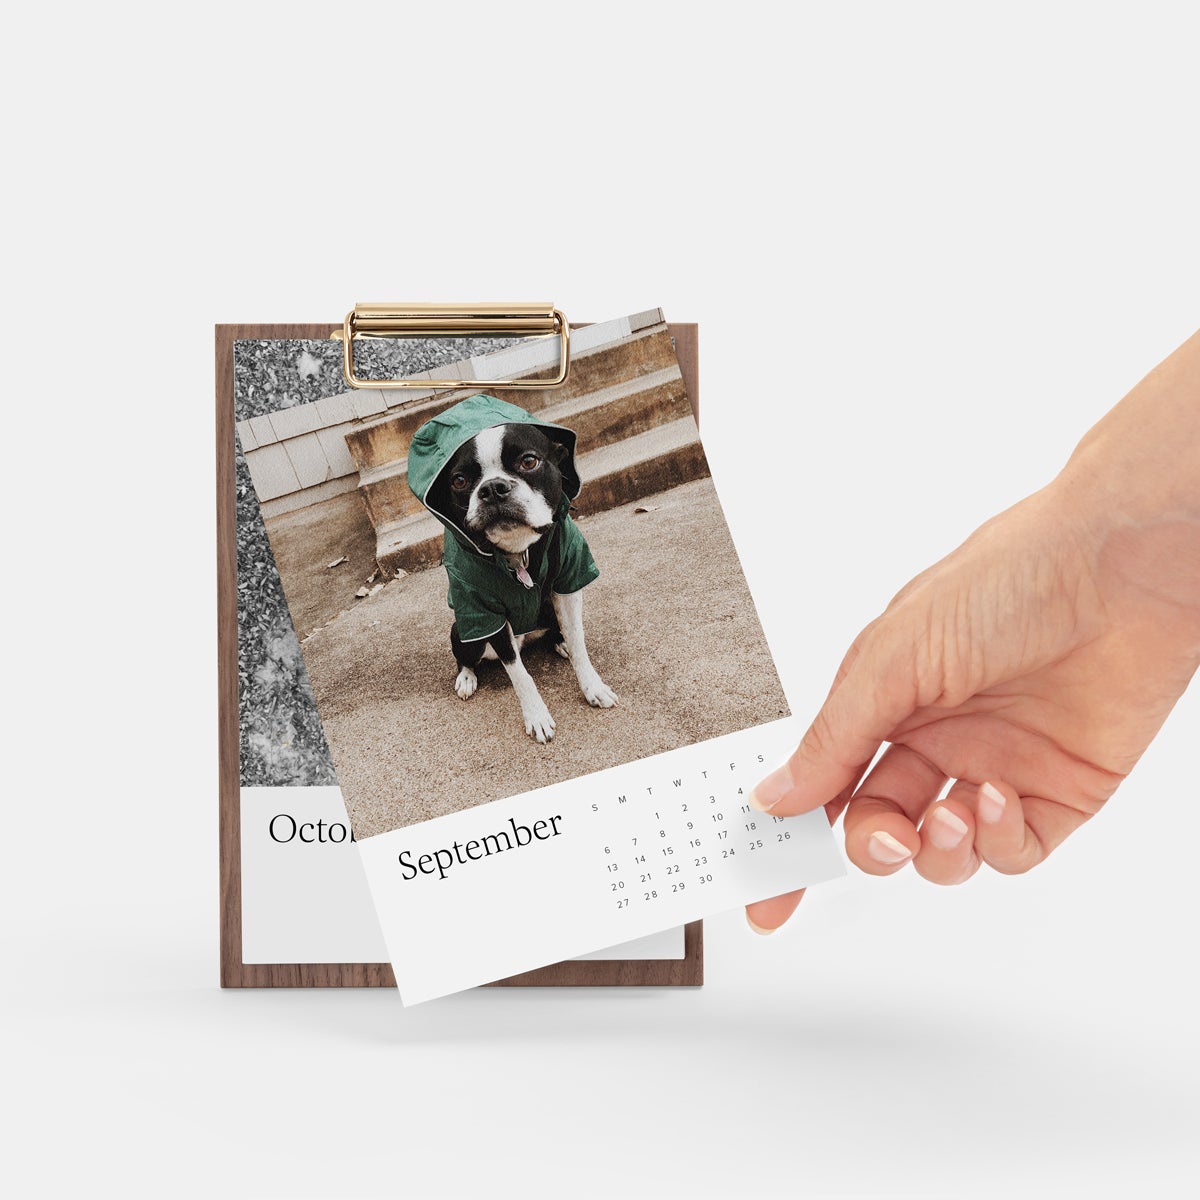 wood desktop calendar set to September featuring photo of cute dog wearing jacket